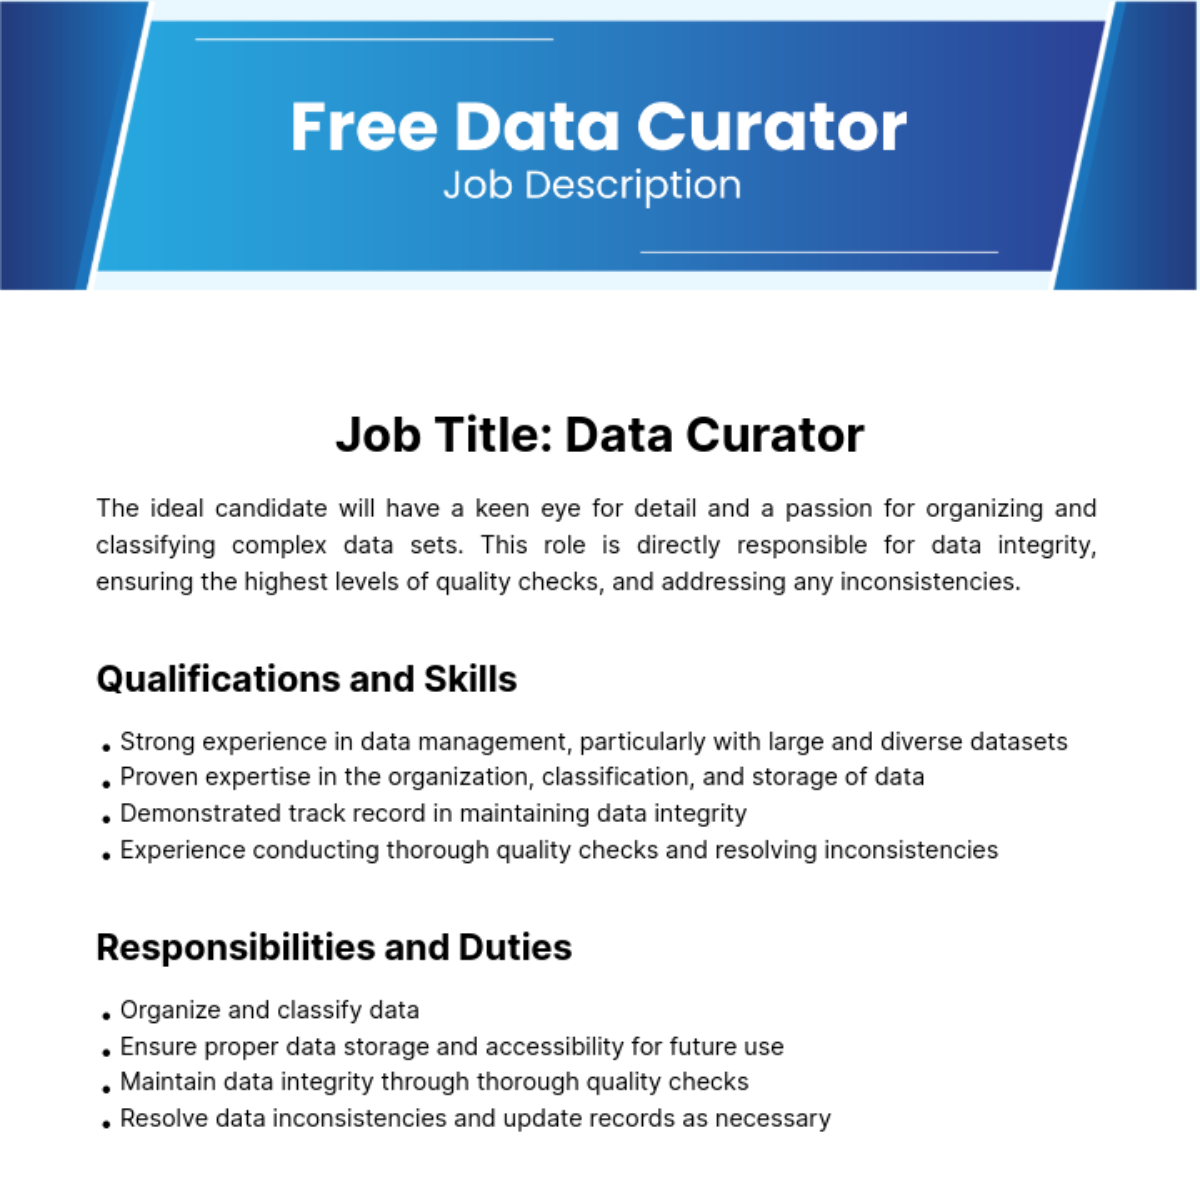 Free Data Curator Job Description Template